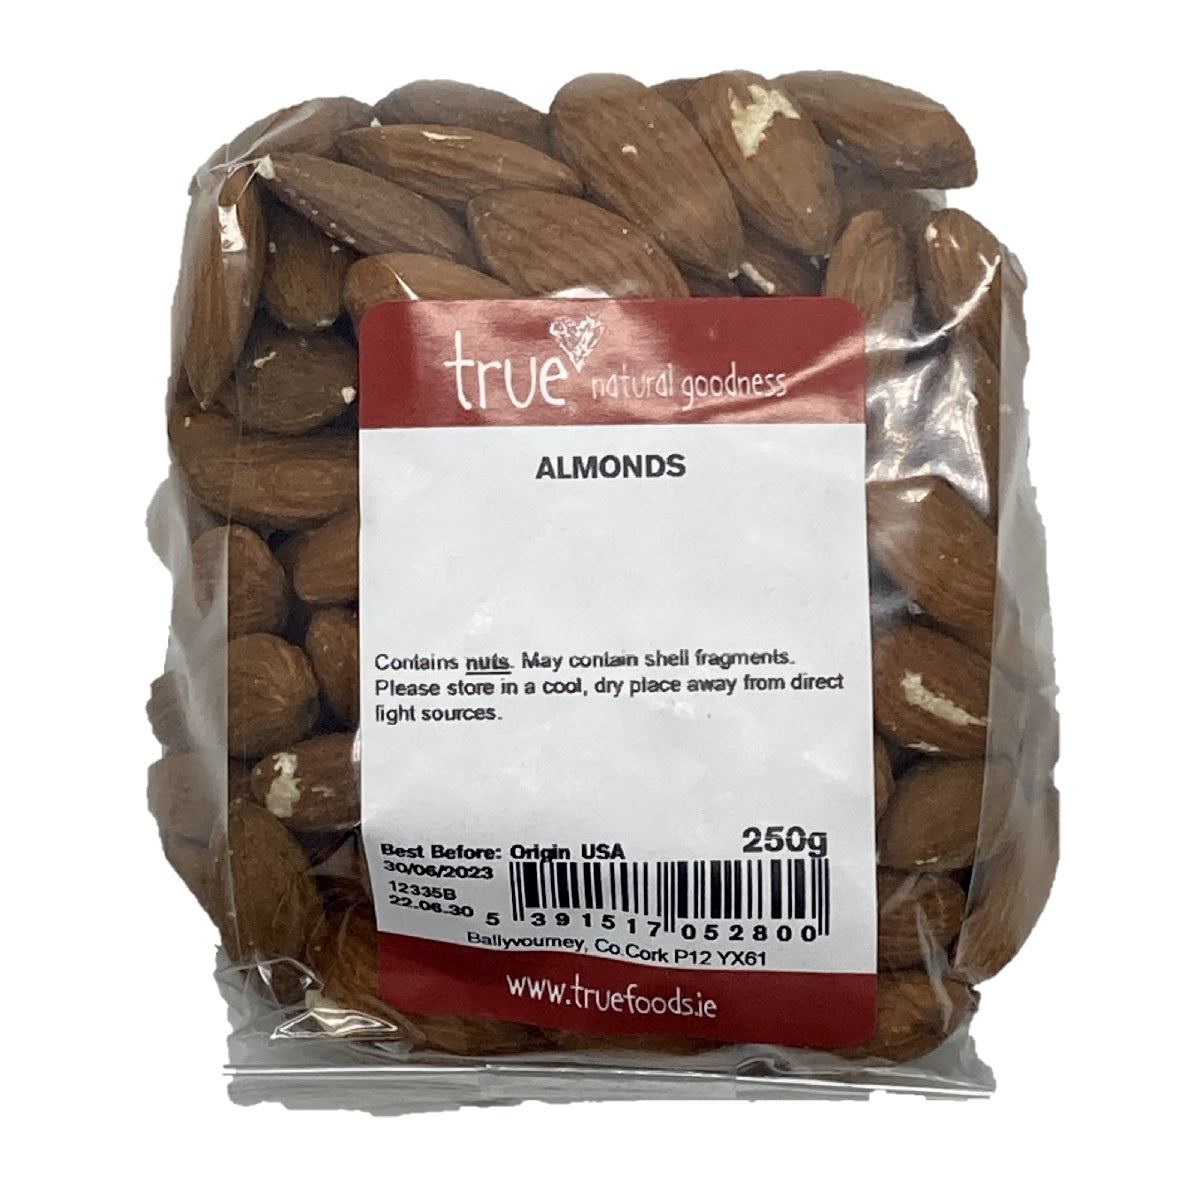 True Natural Goodness Almonds 250g